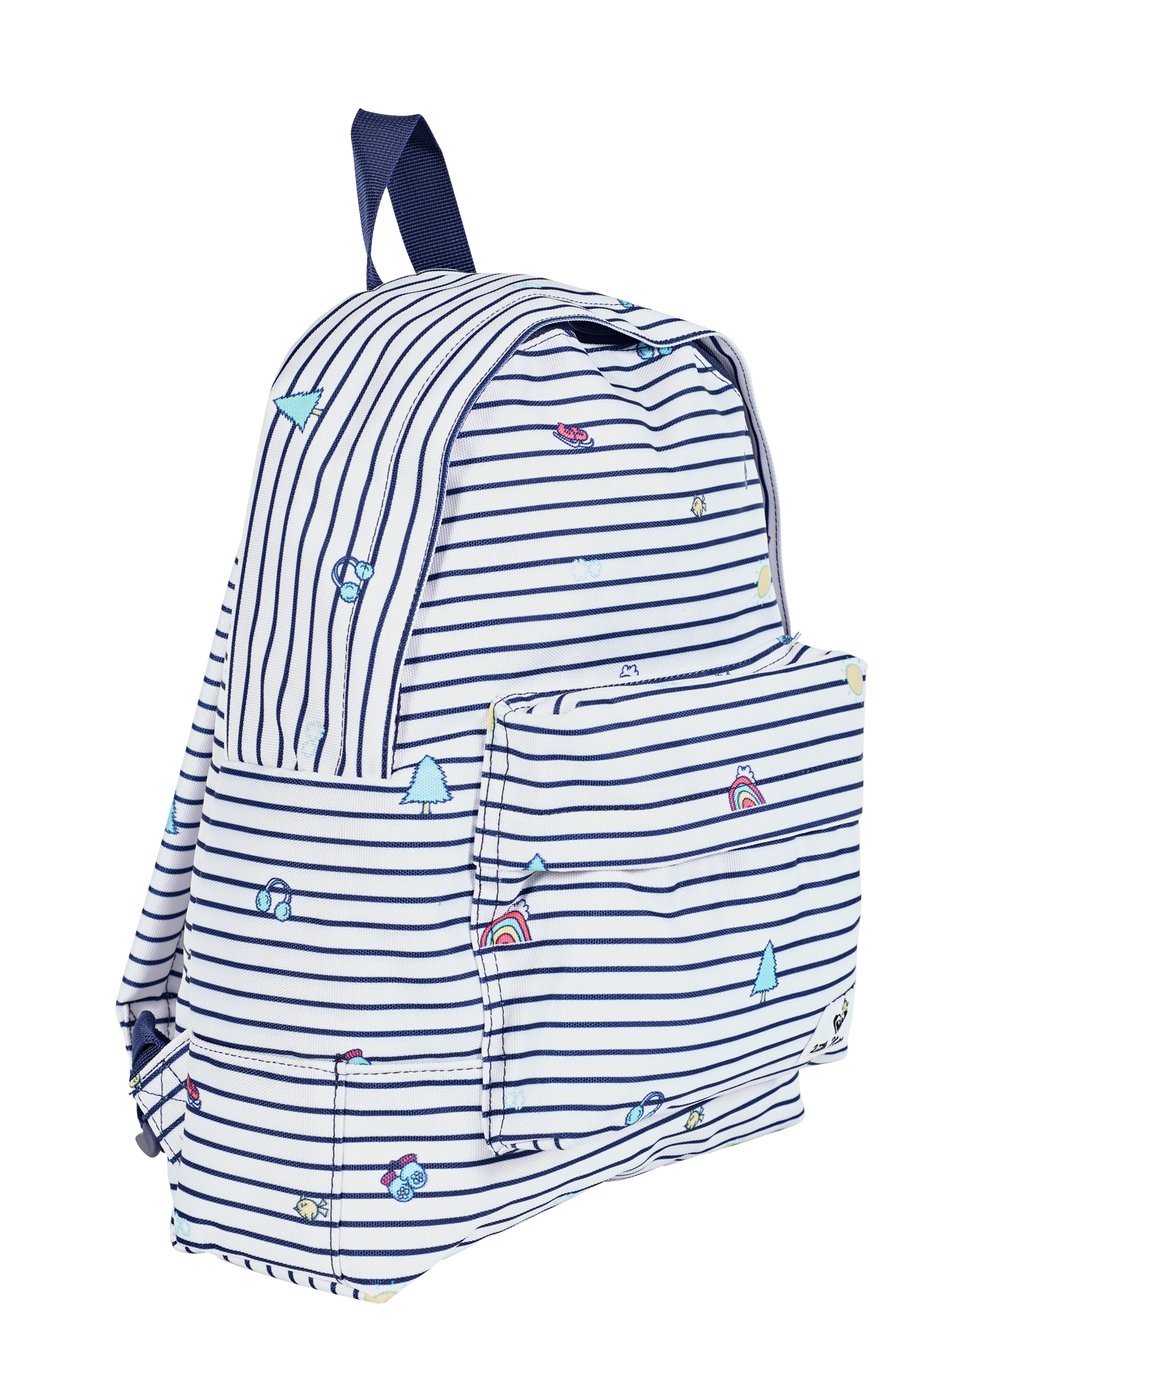 Roxy Navy Stripe Backpack